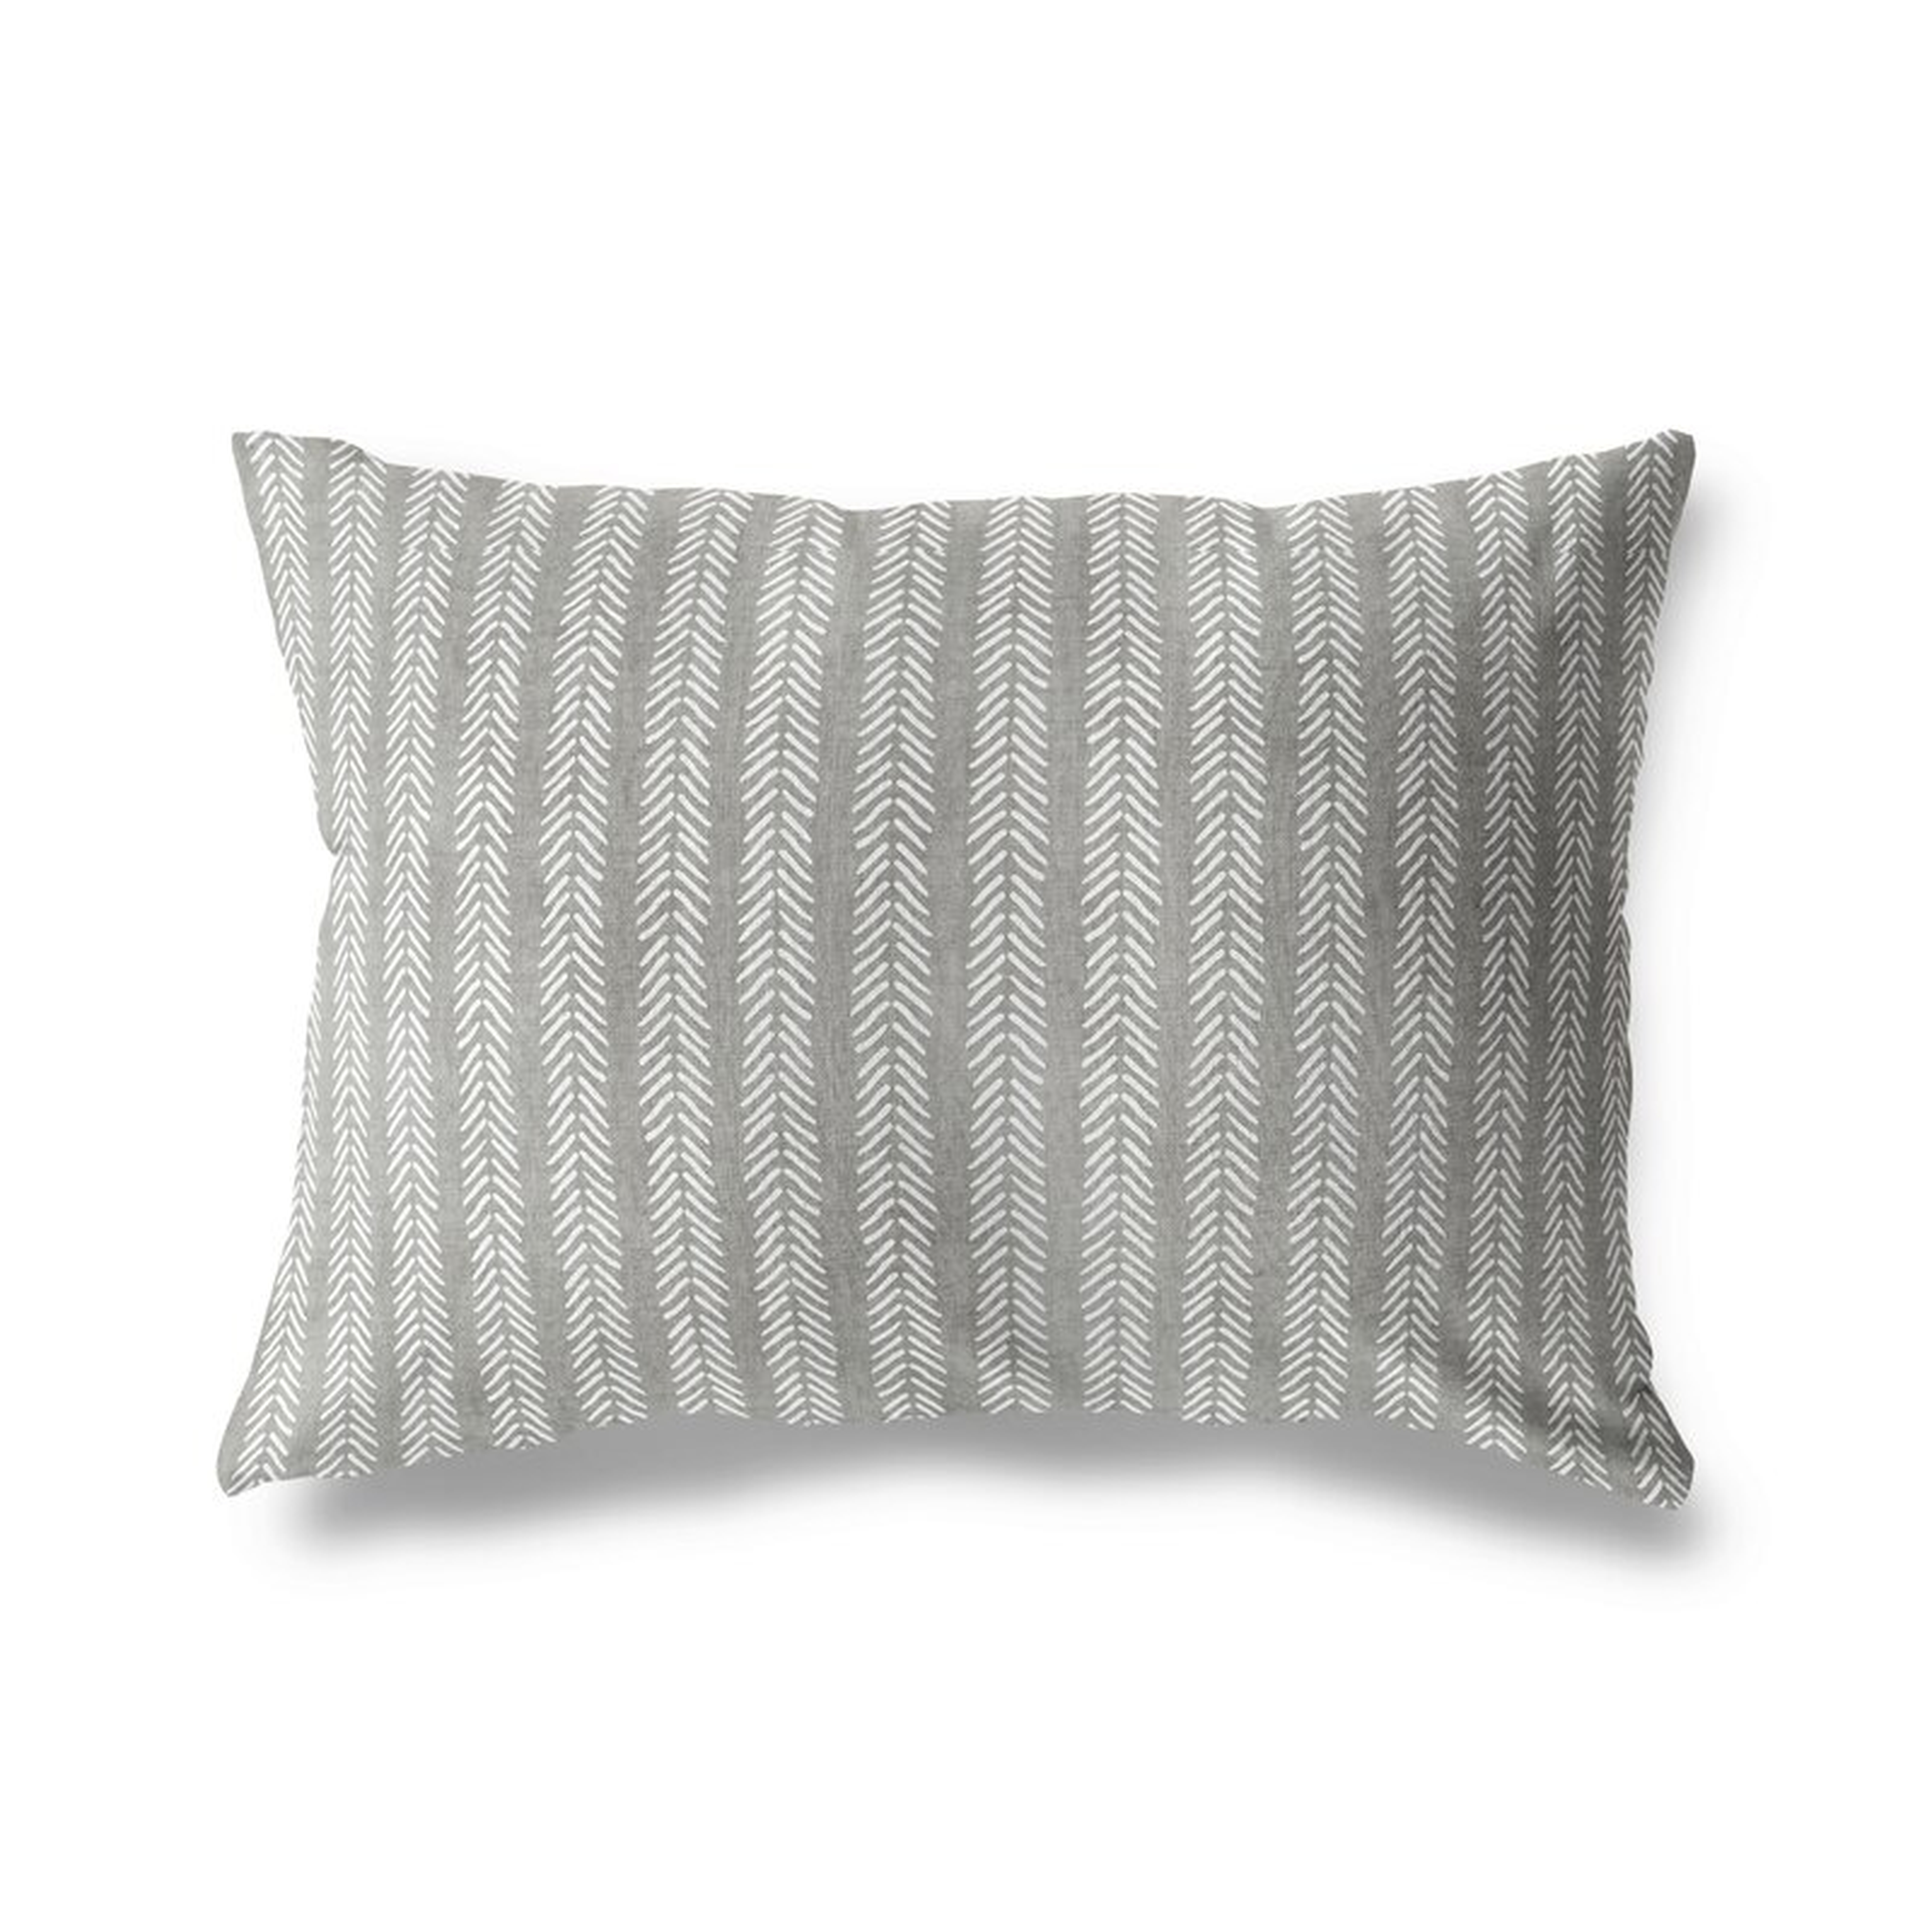 Adeline Rectangular Pillow Cover and Insert - Wayfair